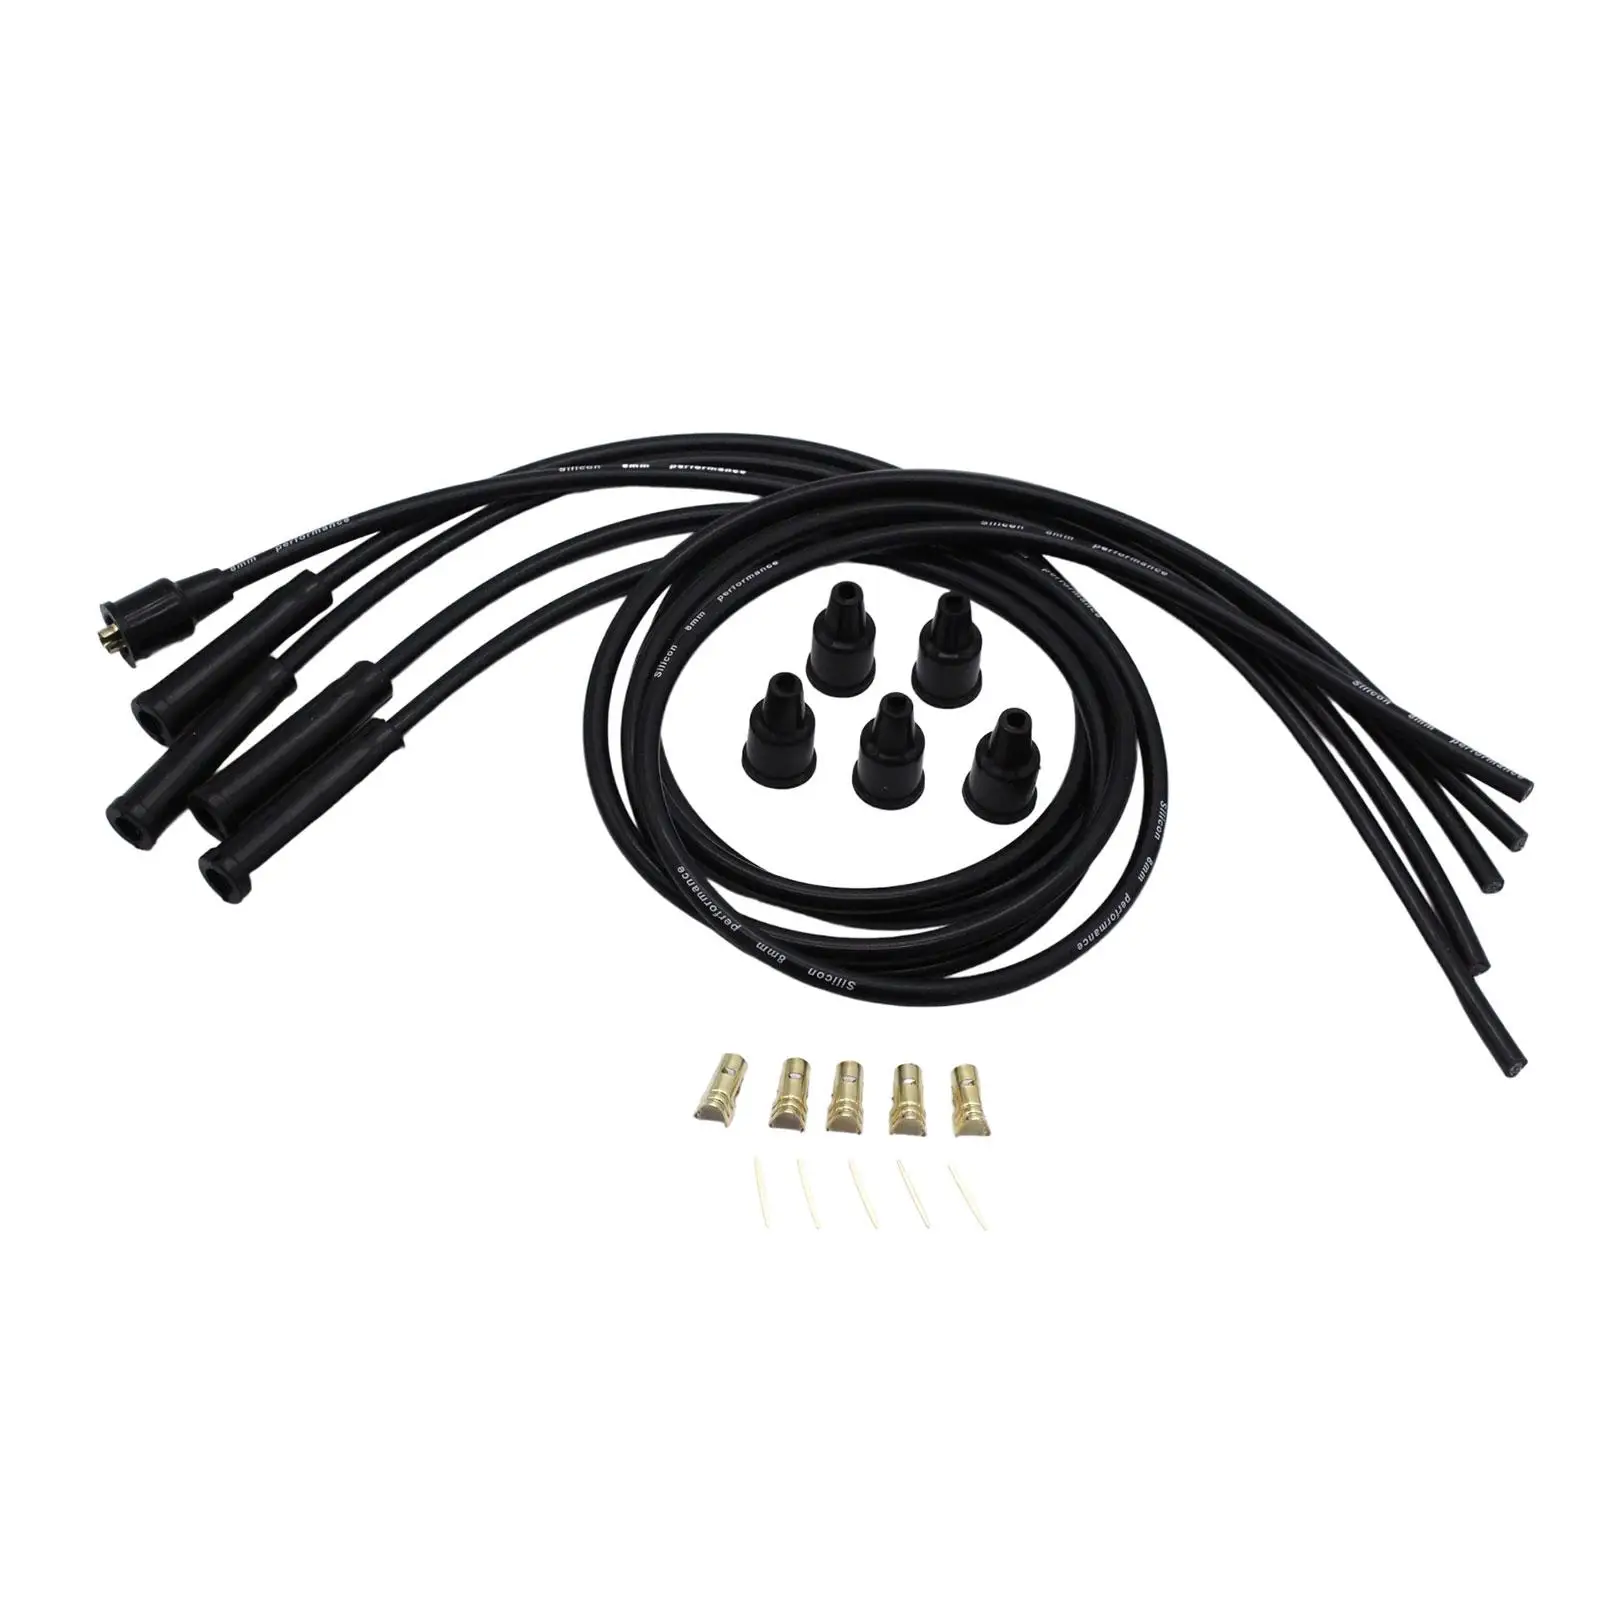 8mm Spark Plug Cables Professional 1 Meter Line Length HT Leads for 4 Cylinder